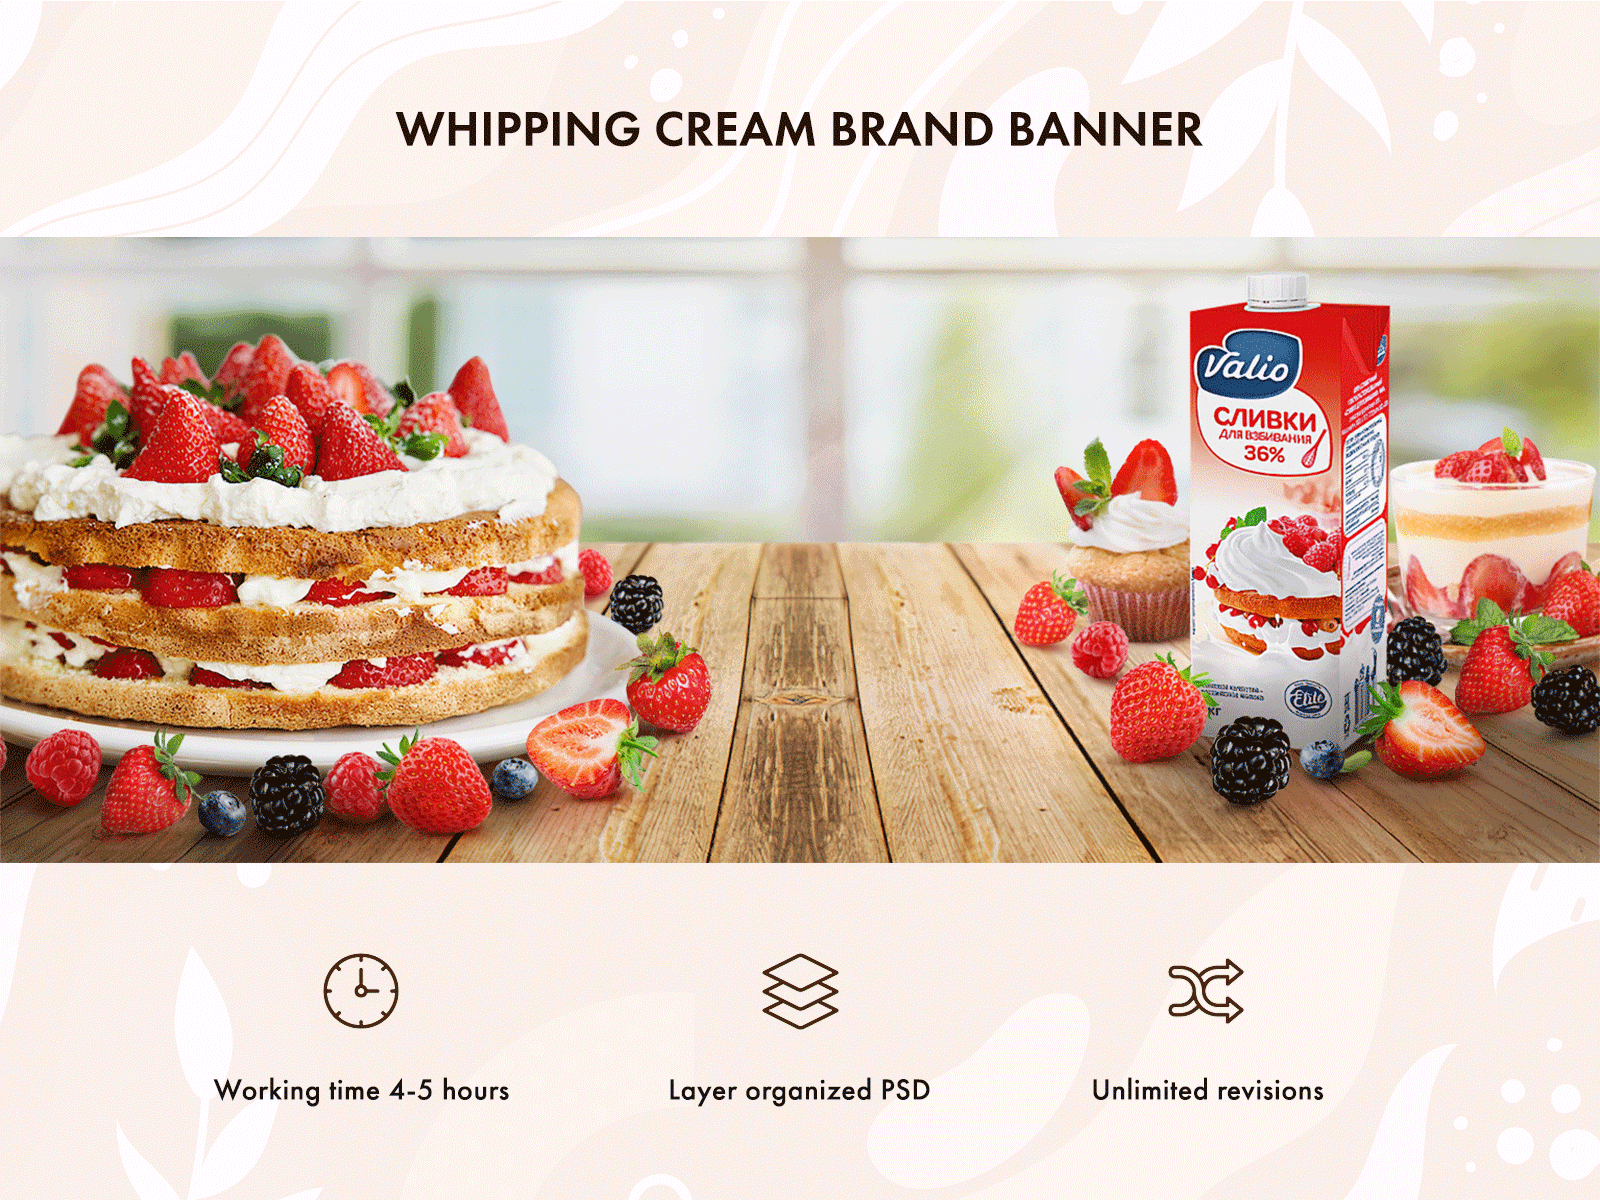 Whipping cream brand banner banner cream food graphic design valio